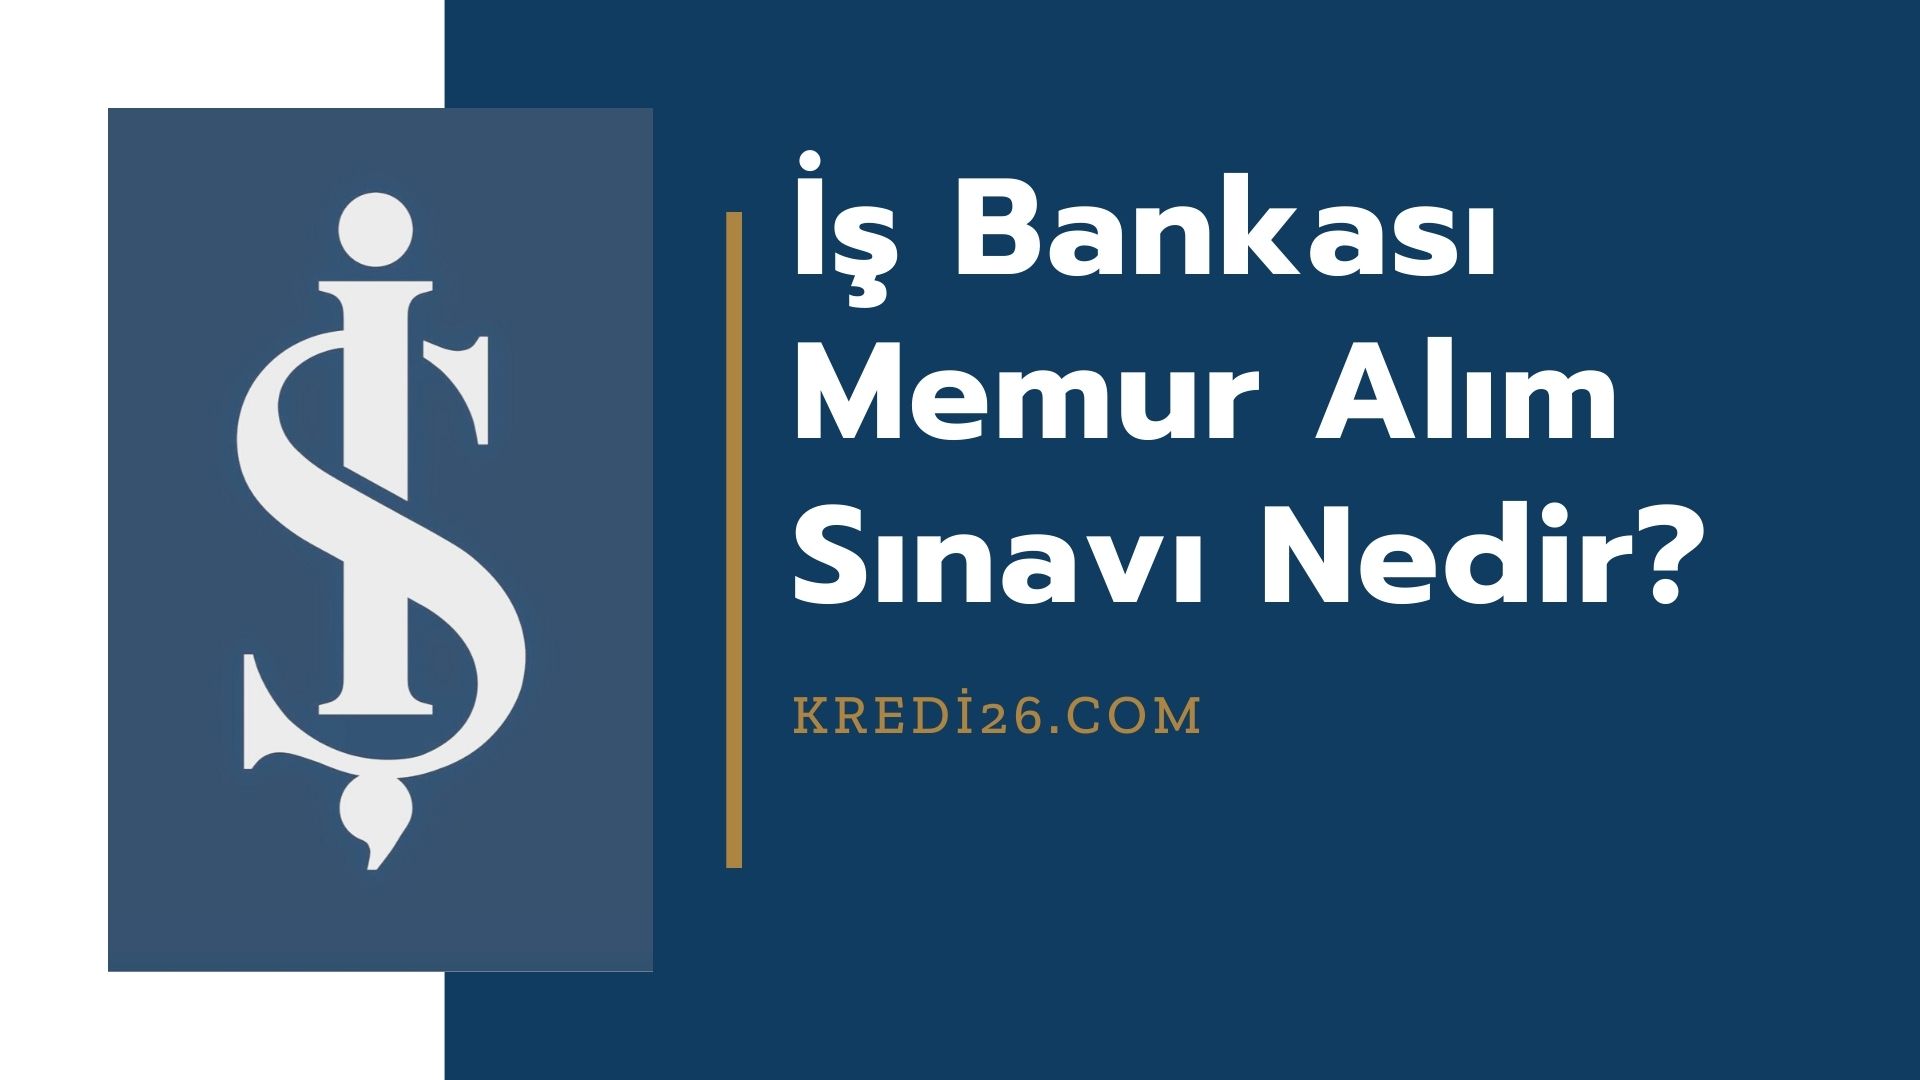 Is Bankasi Memur Alim Sinavi 2021 Online Sinav Is Bankasi Personel Alimi Basvurusu